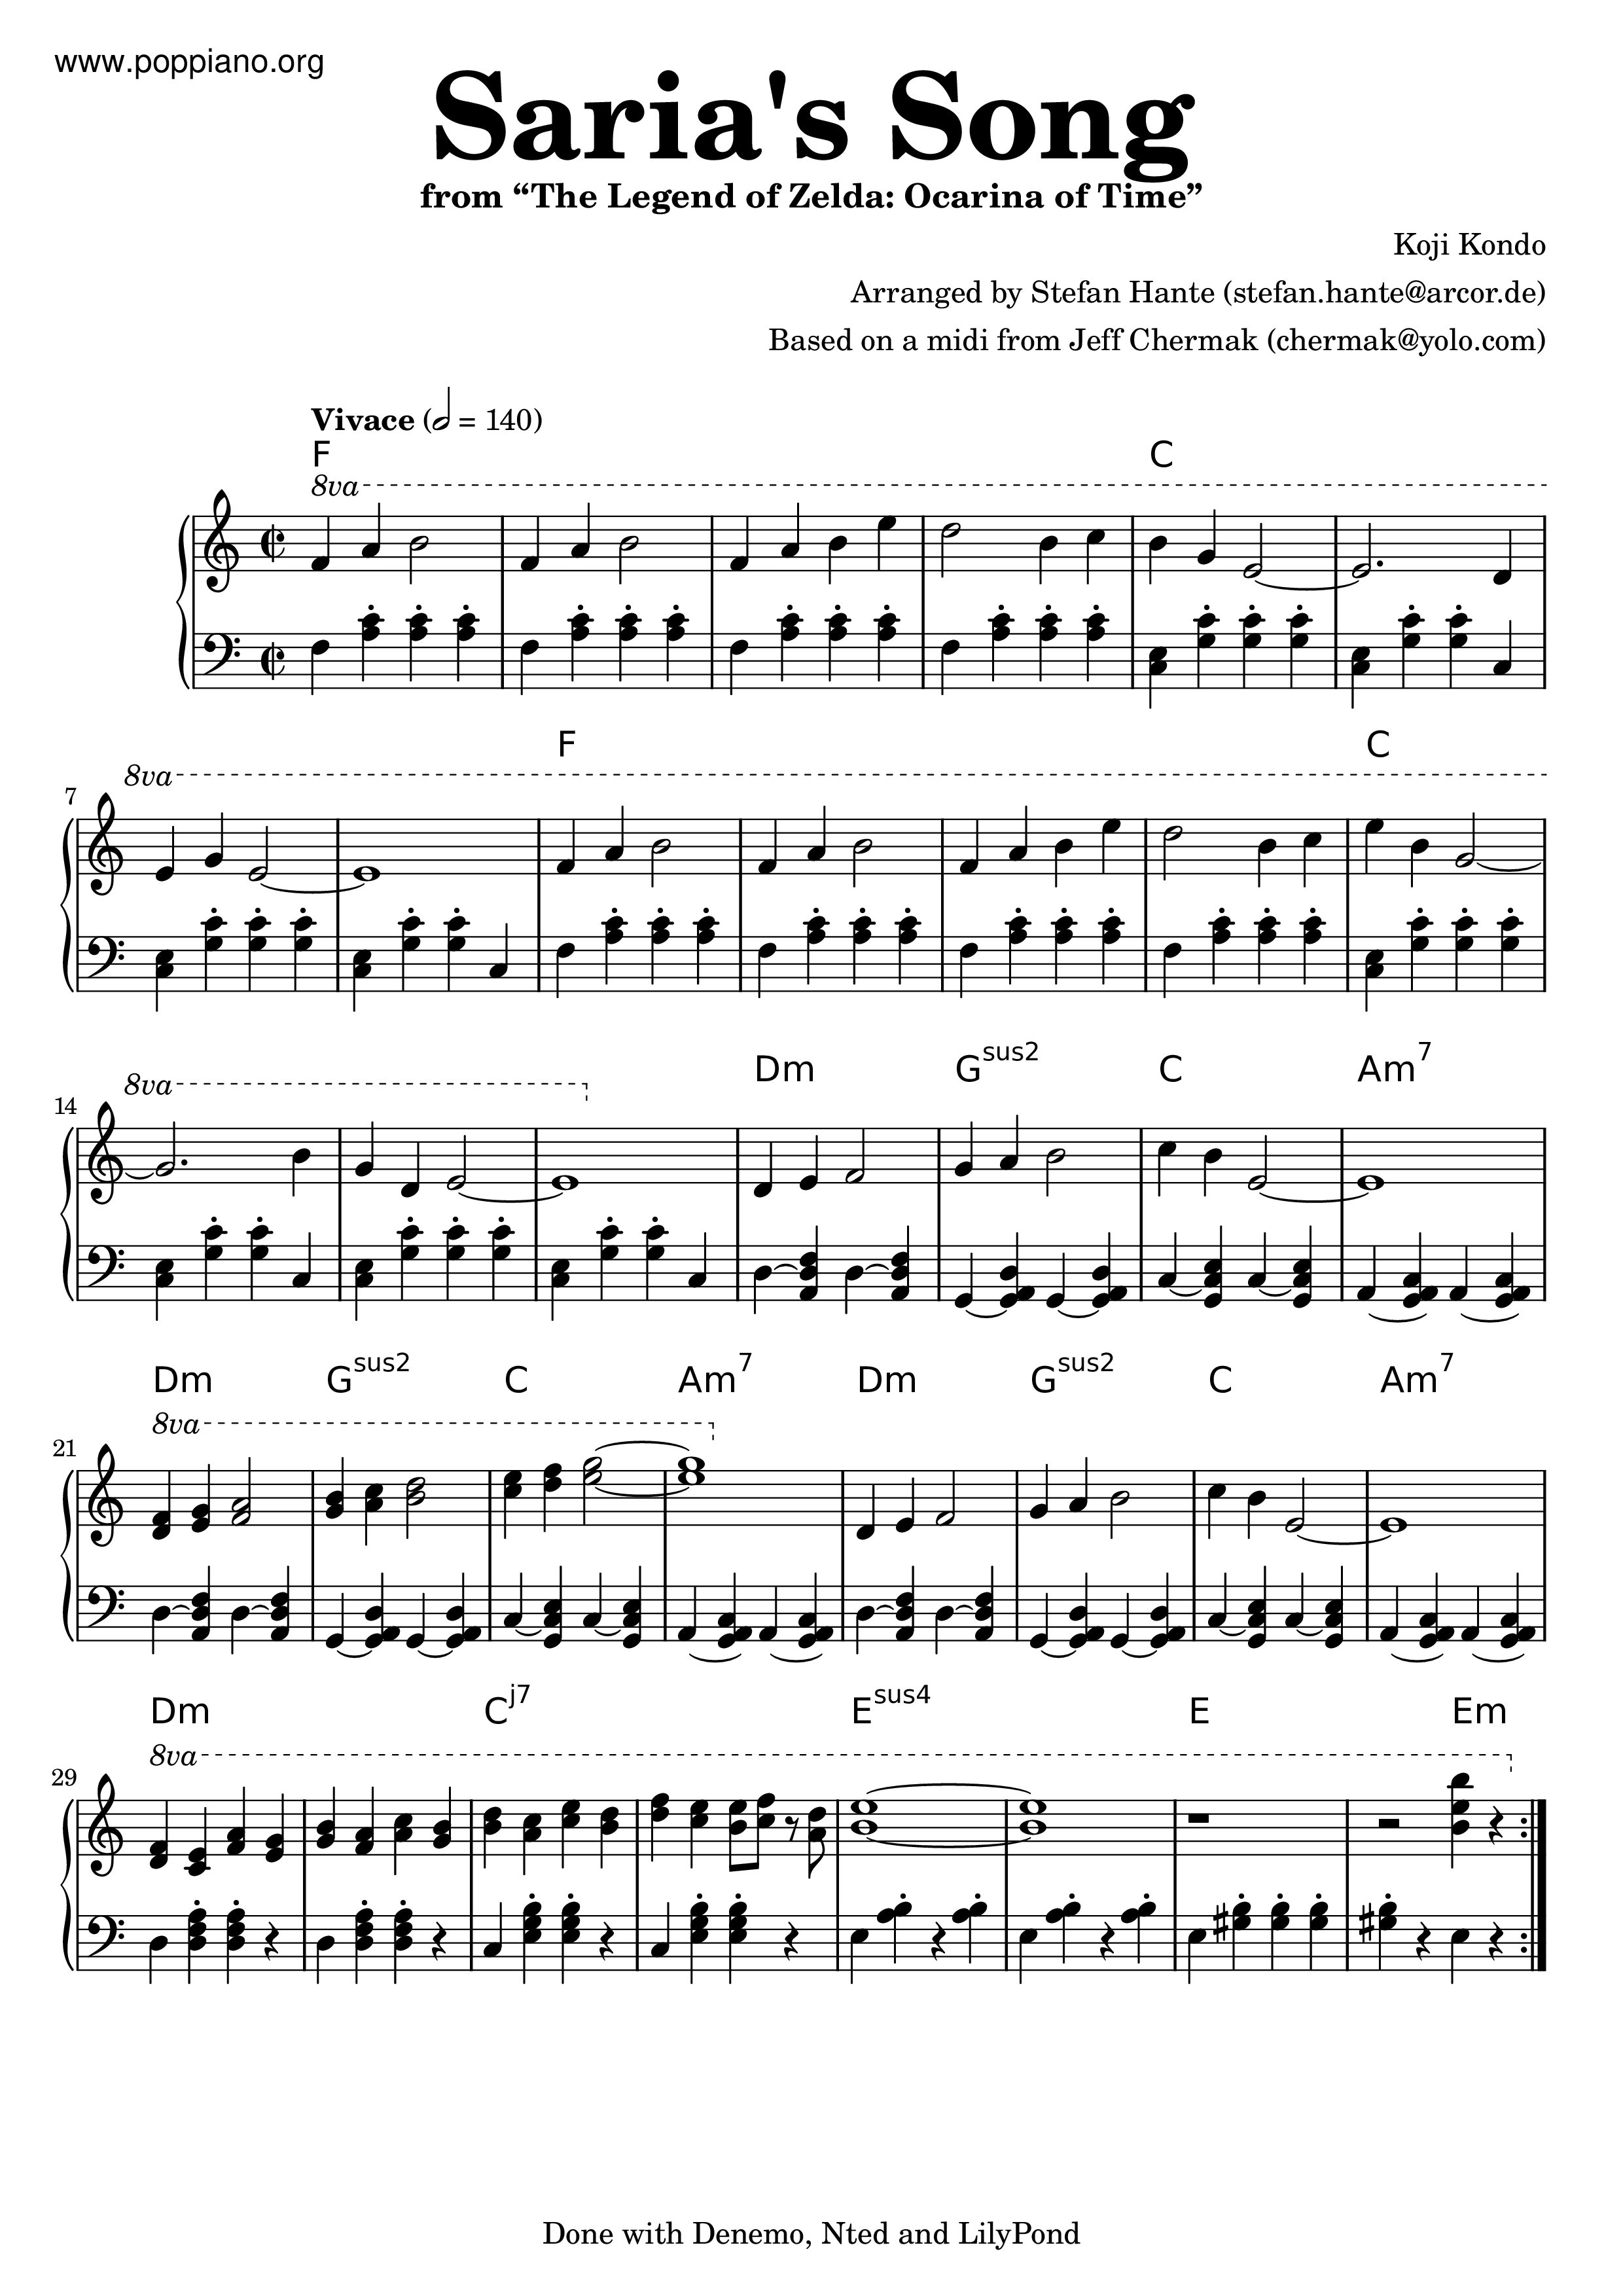 Ocarina of Time - Ocarina Songs Sheet music for Piano (Solo)